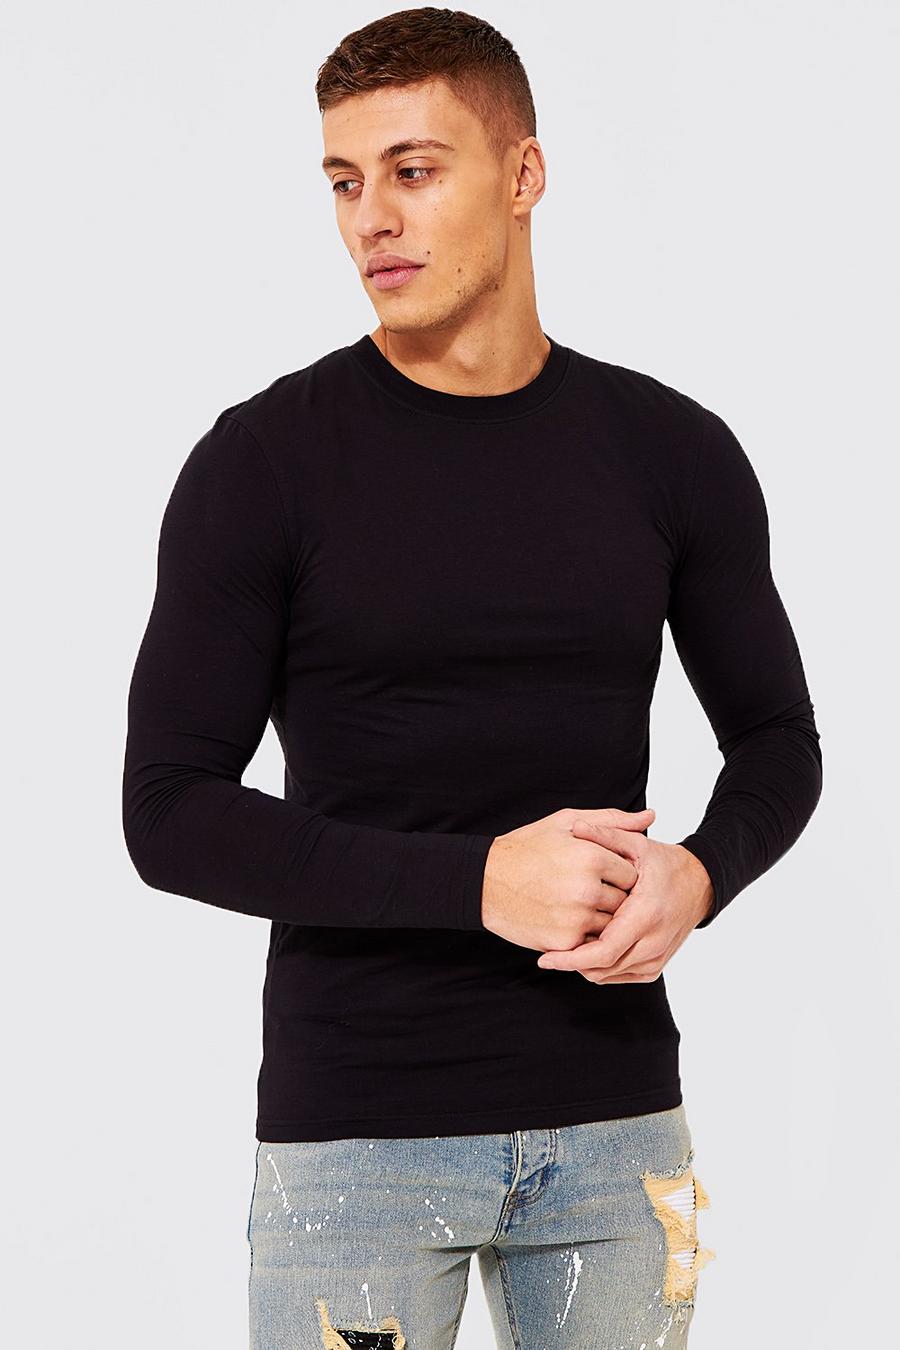 Camiseta de manga larga ajustada al músculo con algodón ecológico, Black nero